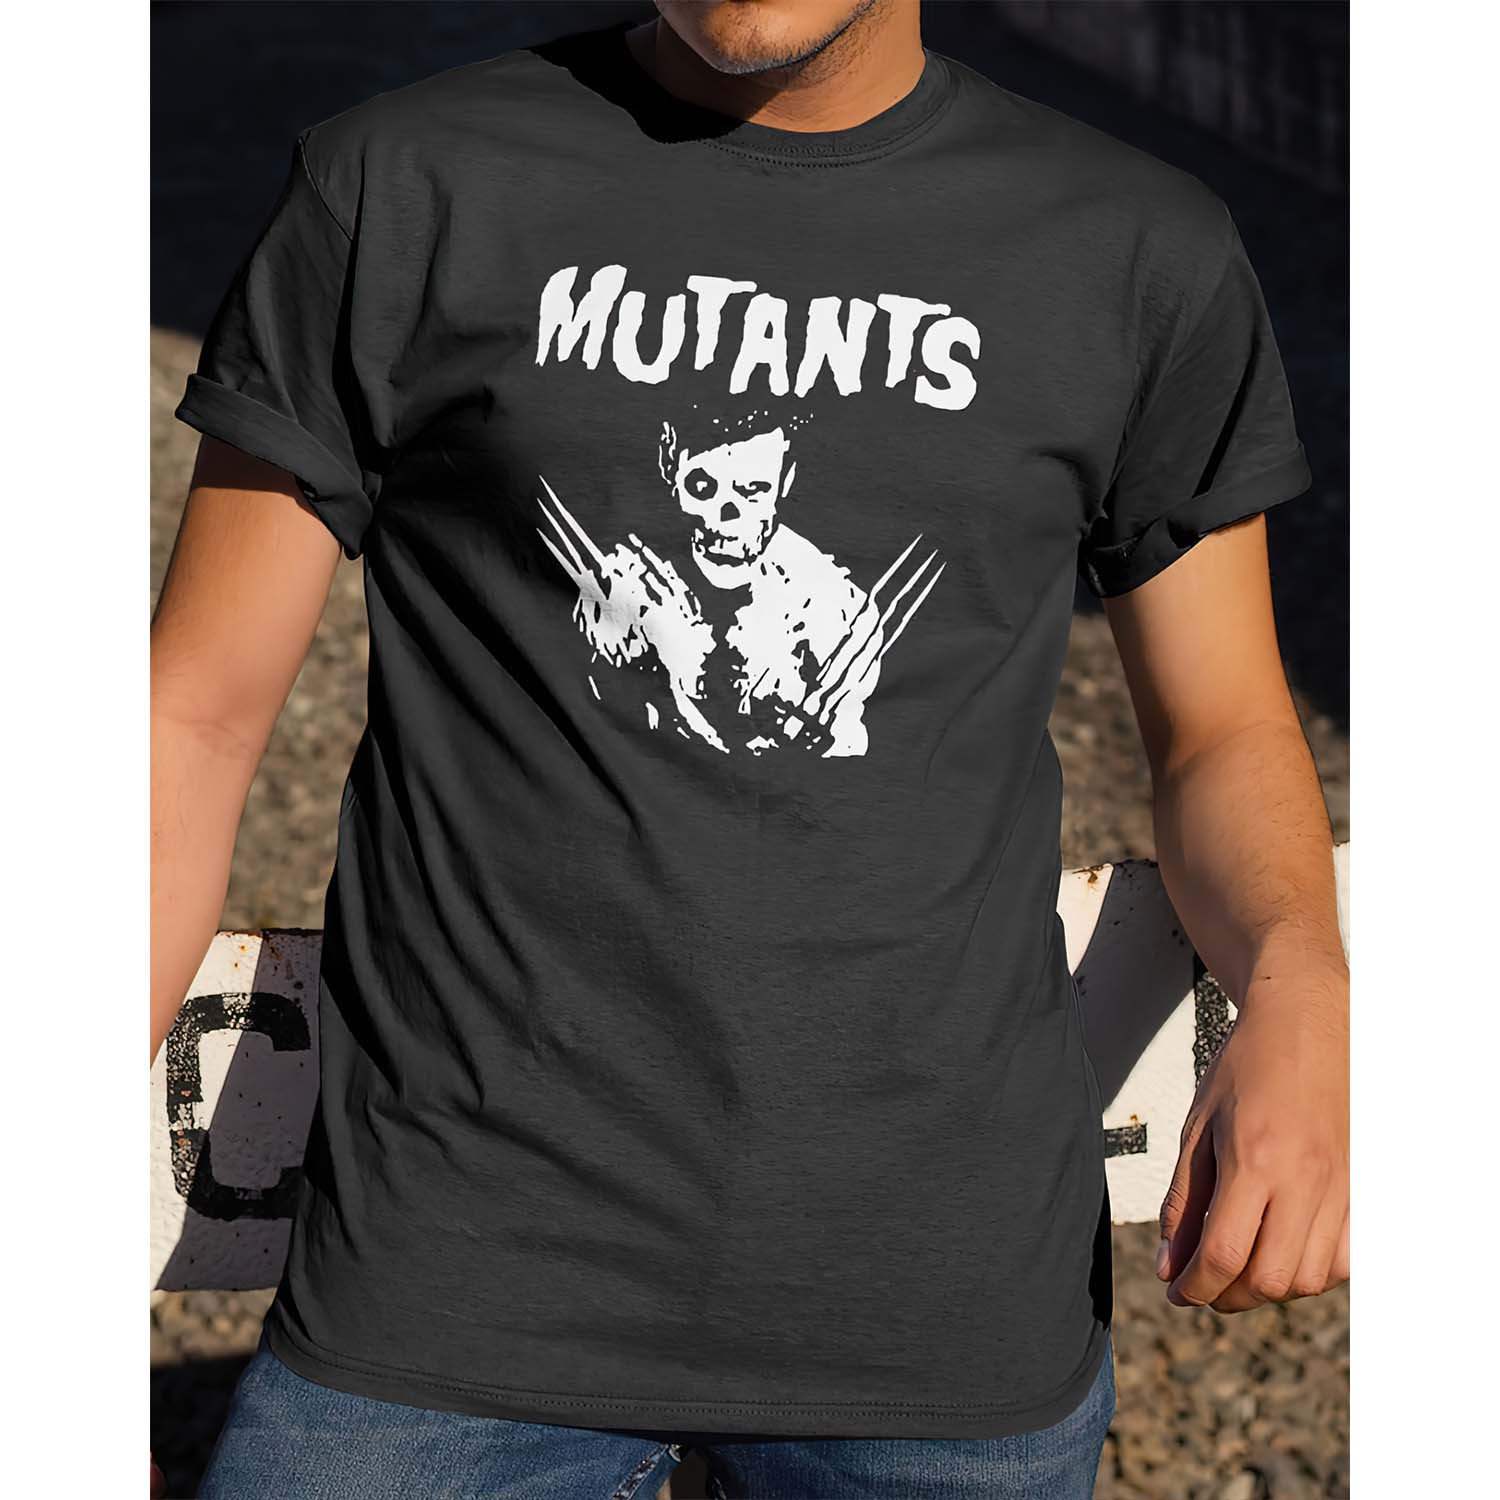 Cm Punk Mutants Shirt